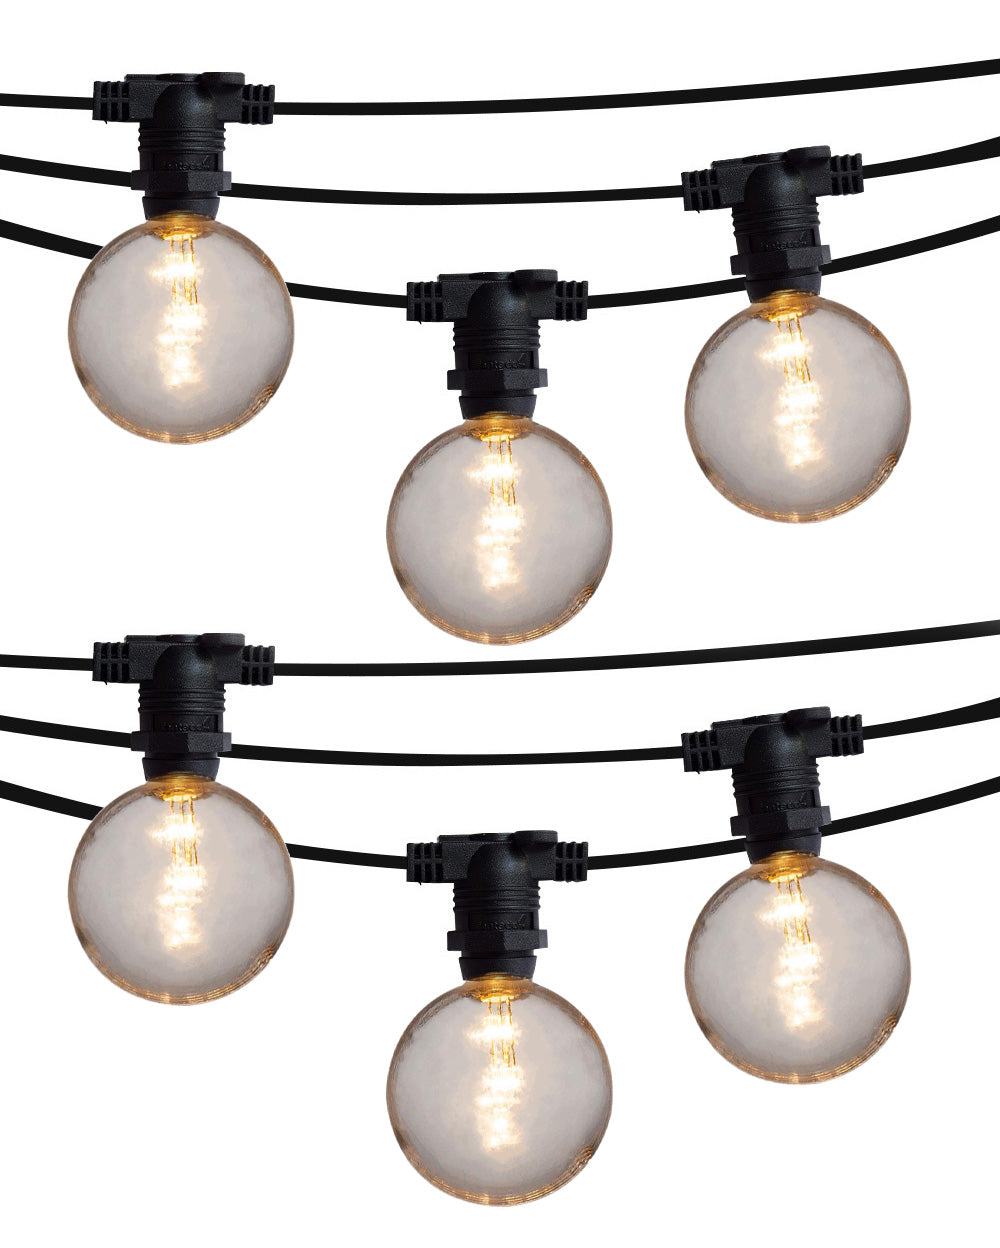 25 Socket Outdoor Commercial String Light Set, Shatterproof LED Bulbs, 29 FT Black Cord w/ E12 C7 Base, Weatherproof